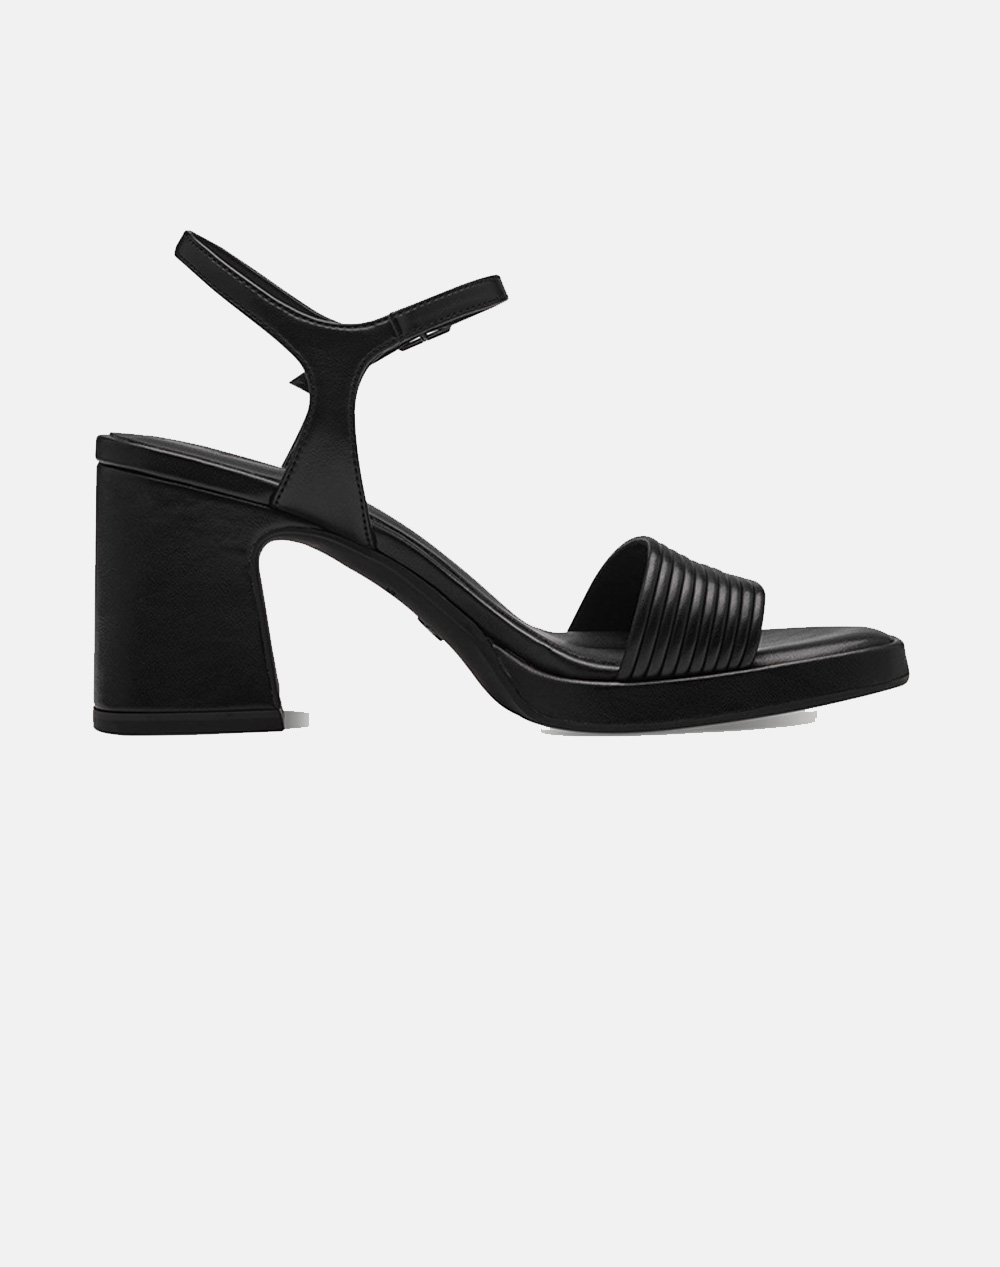 TAMARIS Sling Sandals 1-28368-42-001 Black